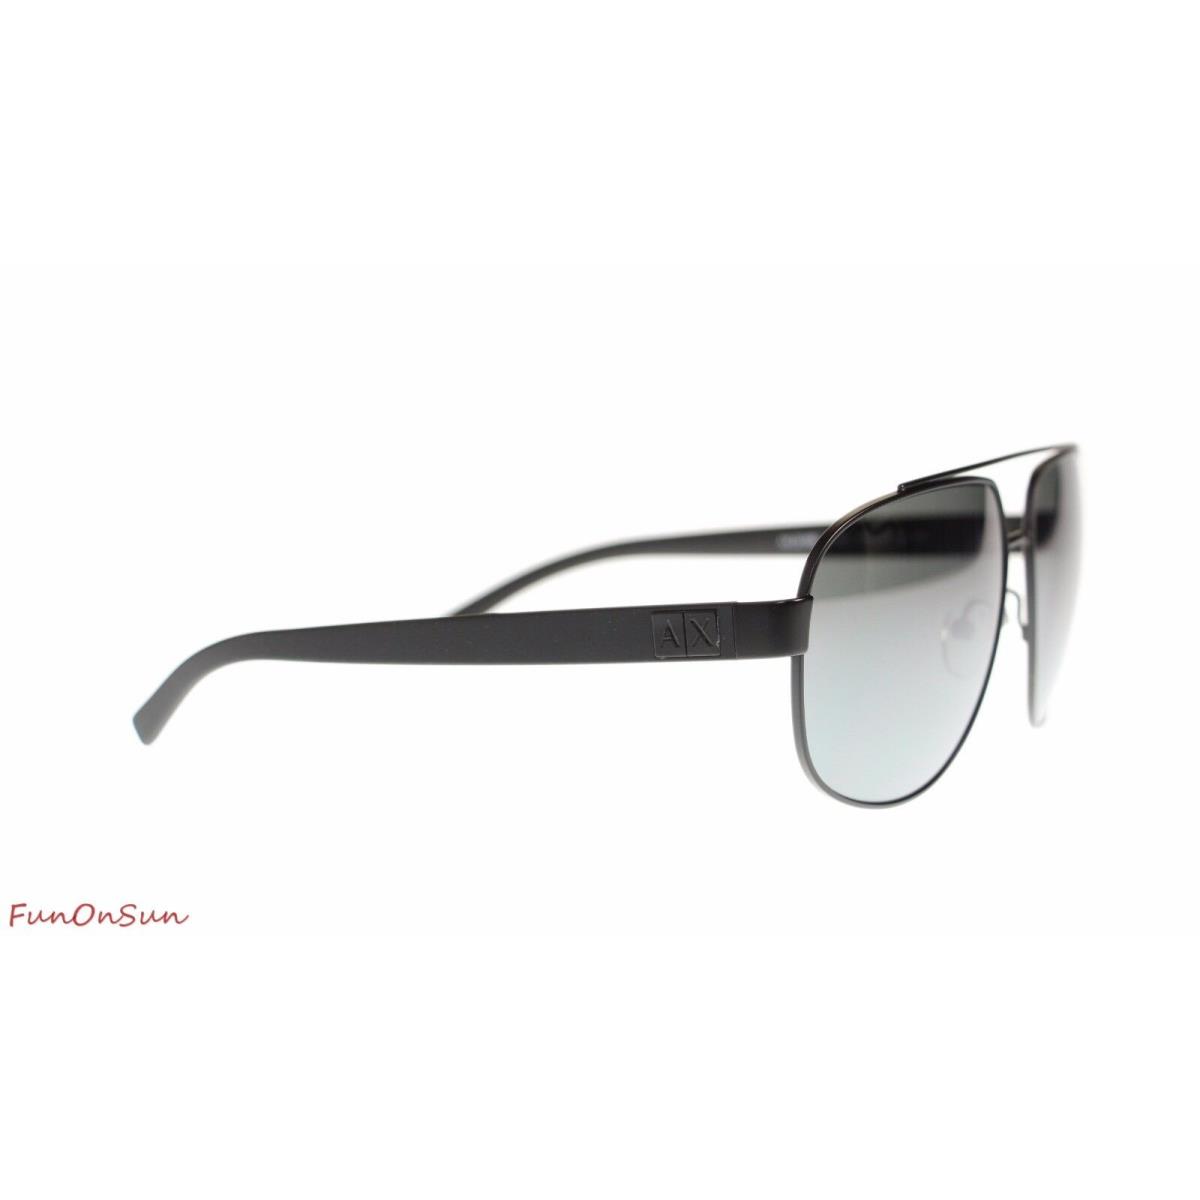 Armani Exchange sunglasses  - Black Frame, Silver Lens 1